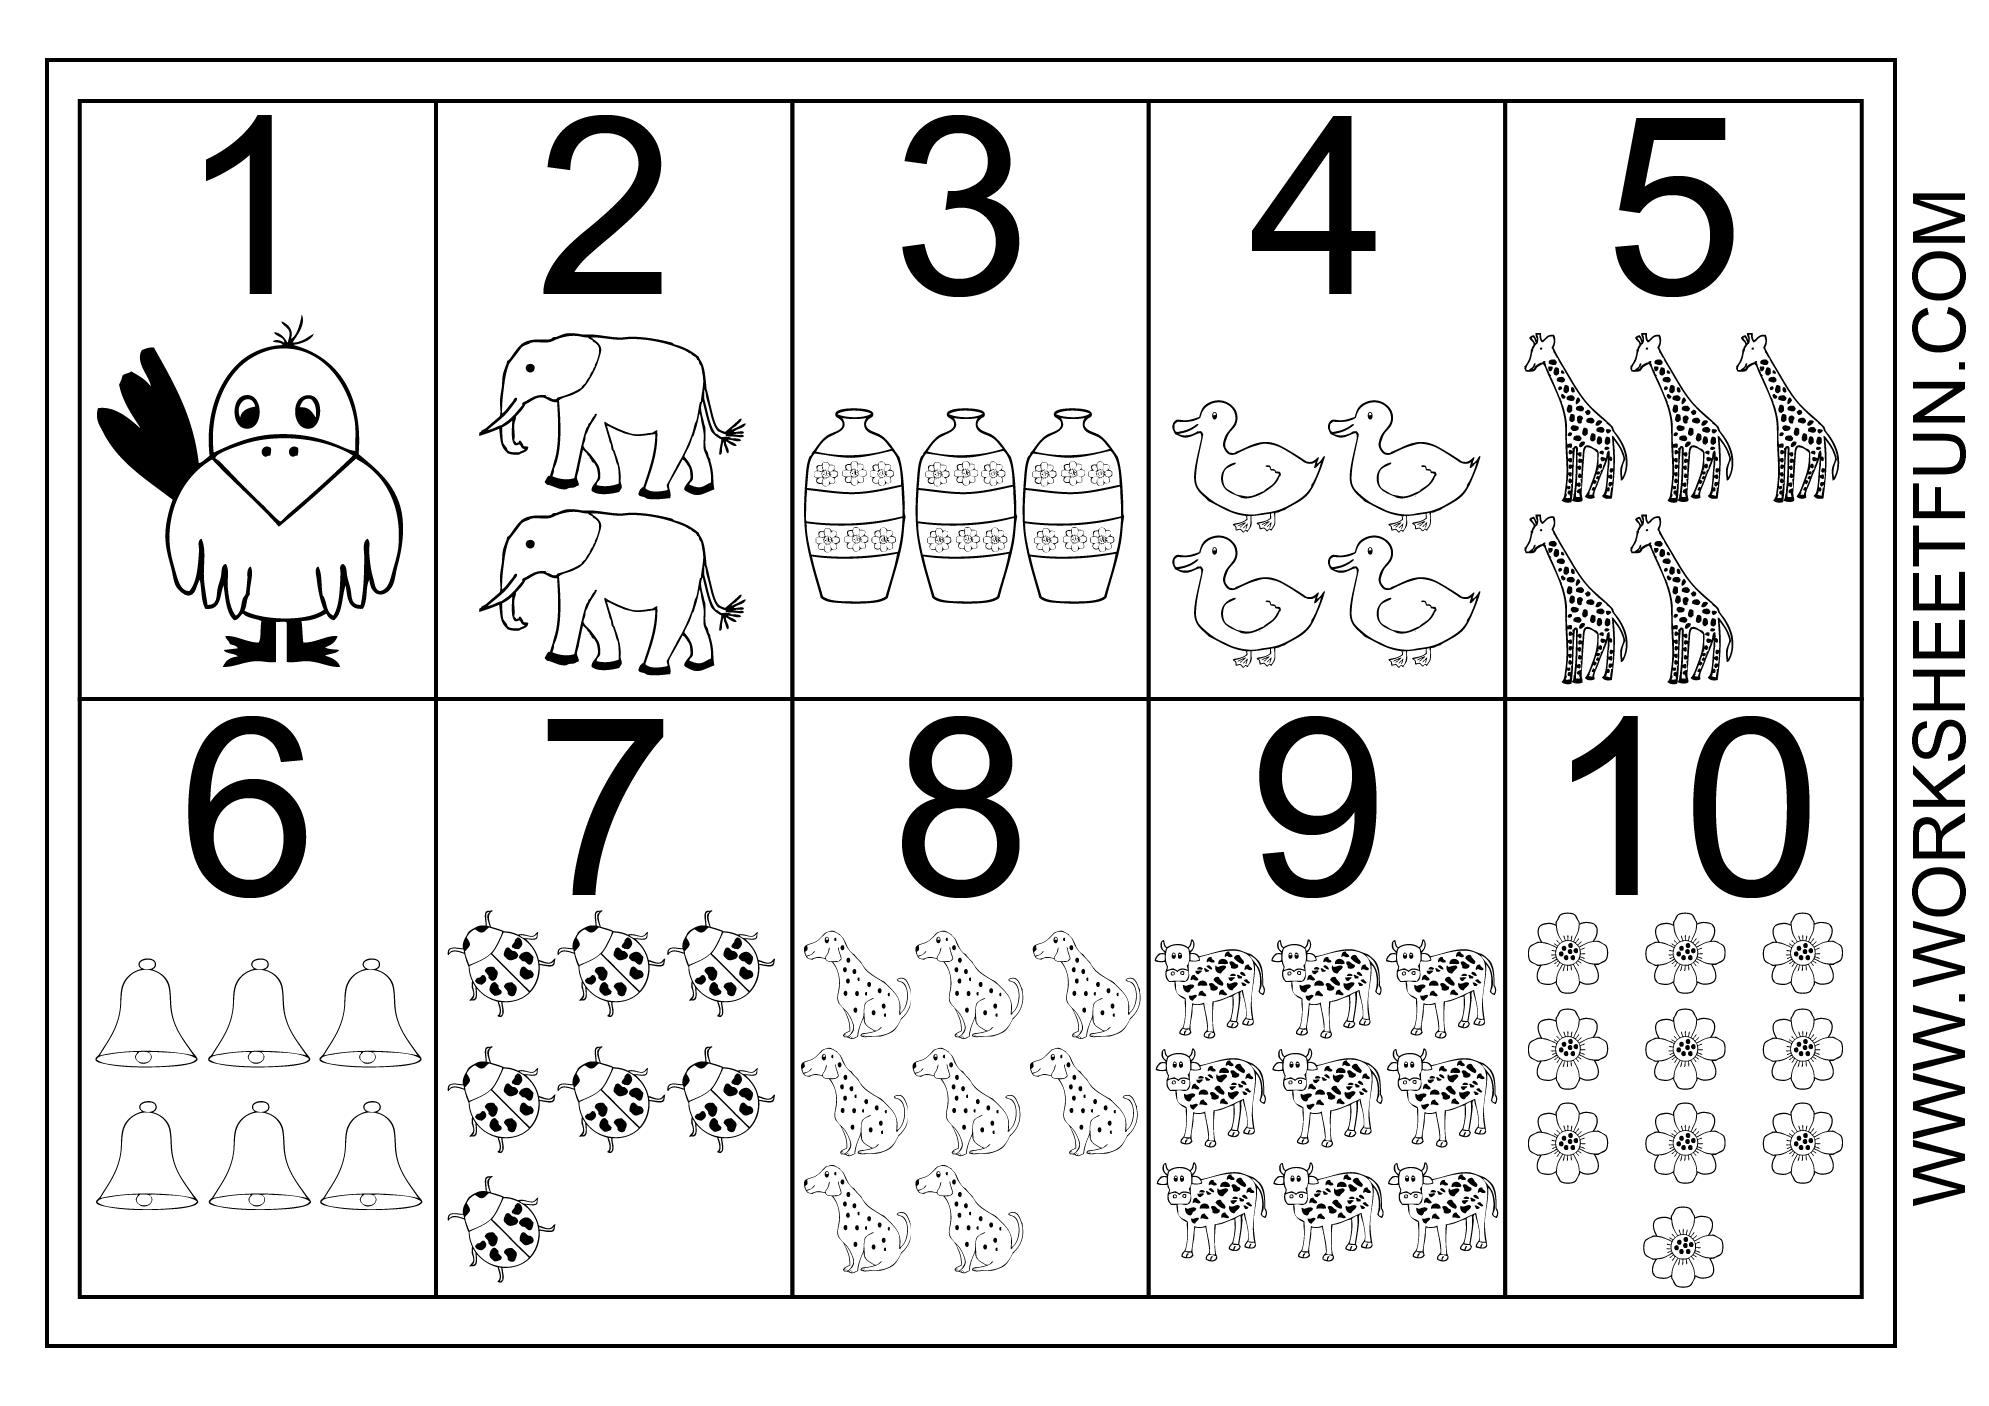 16-best-images-of-numbers-1-50-worksheets-kindergarten-number-worksheets-1-10-missing-numbers